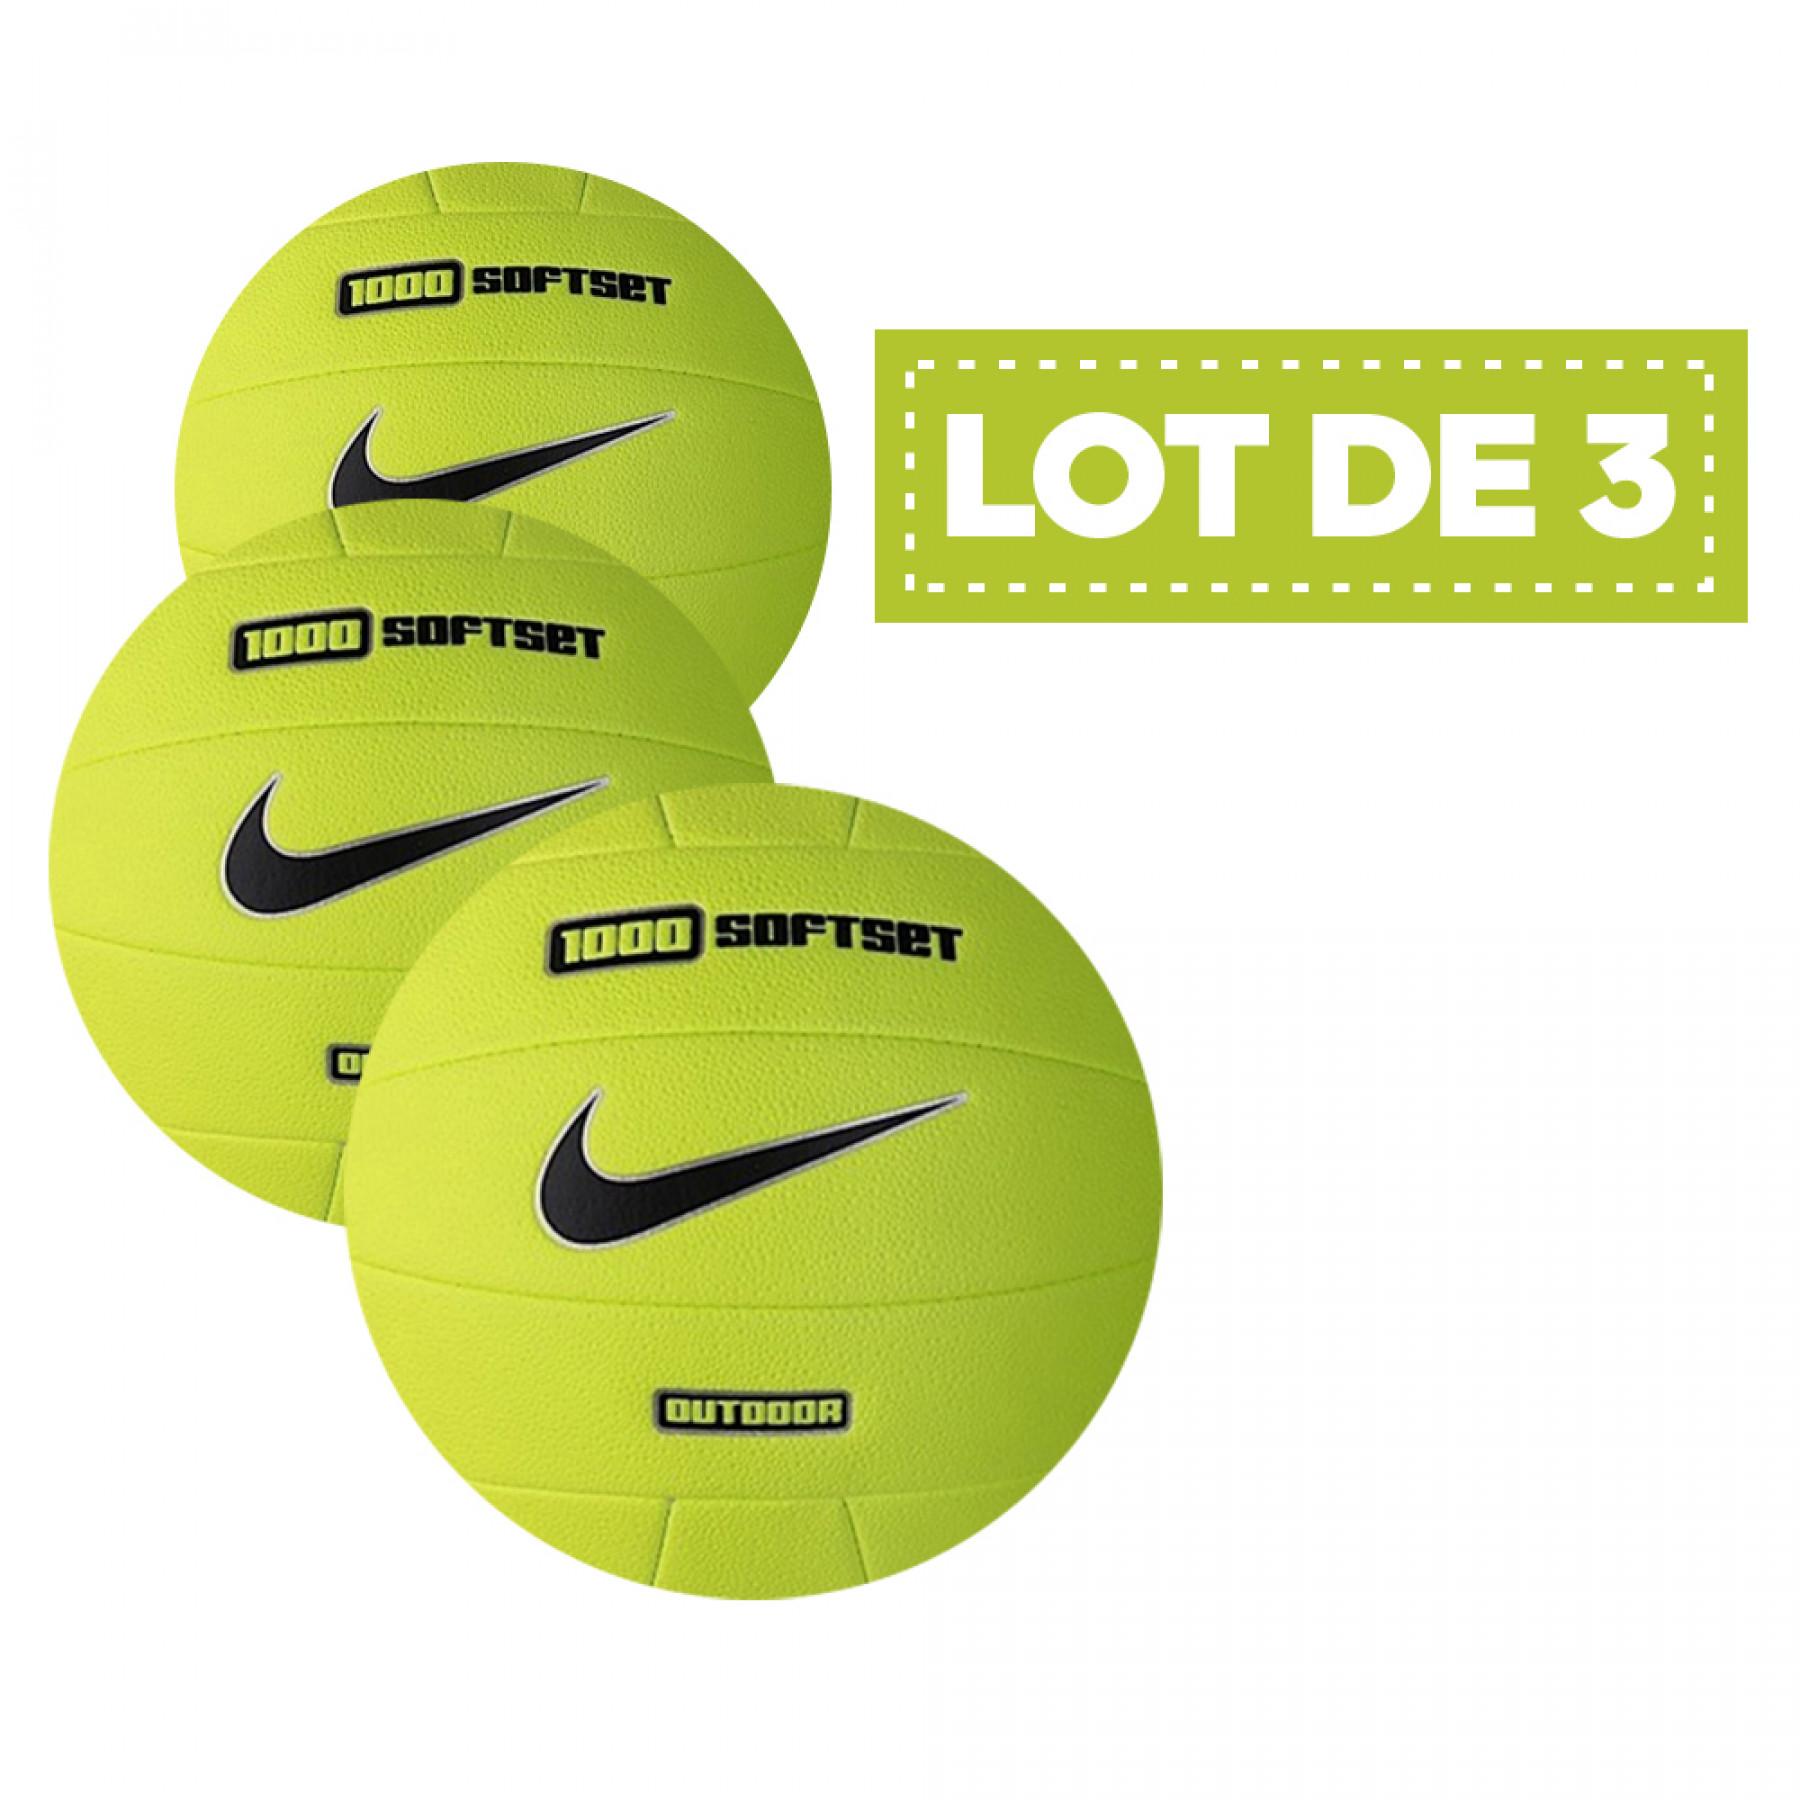 Juego de 3 globos Nike 1000 softset outdoor jaune fluo